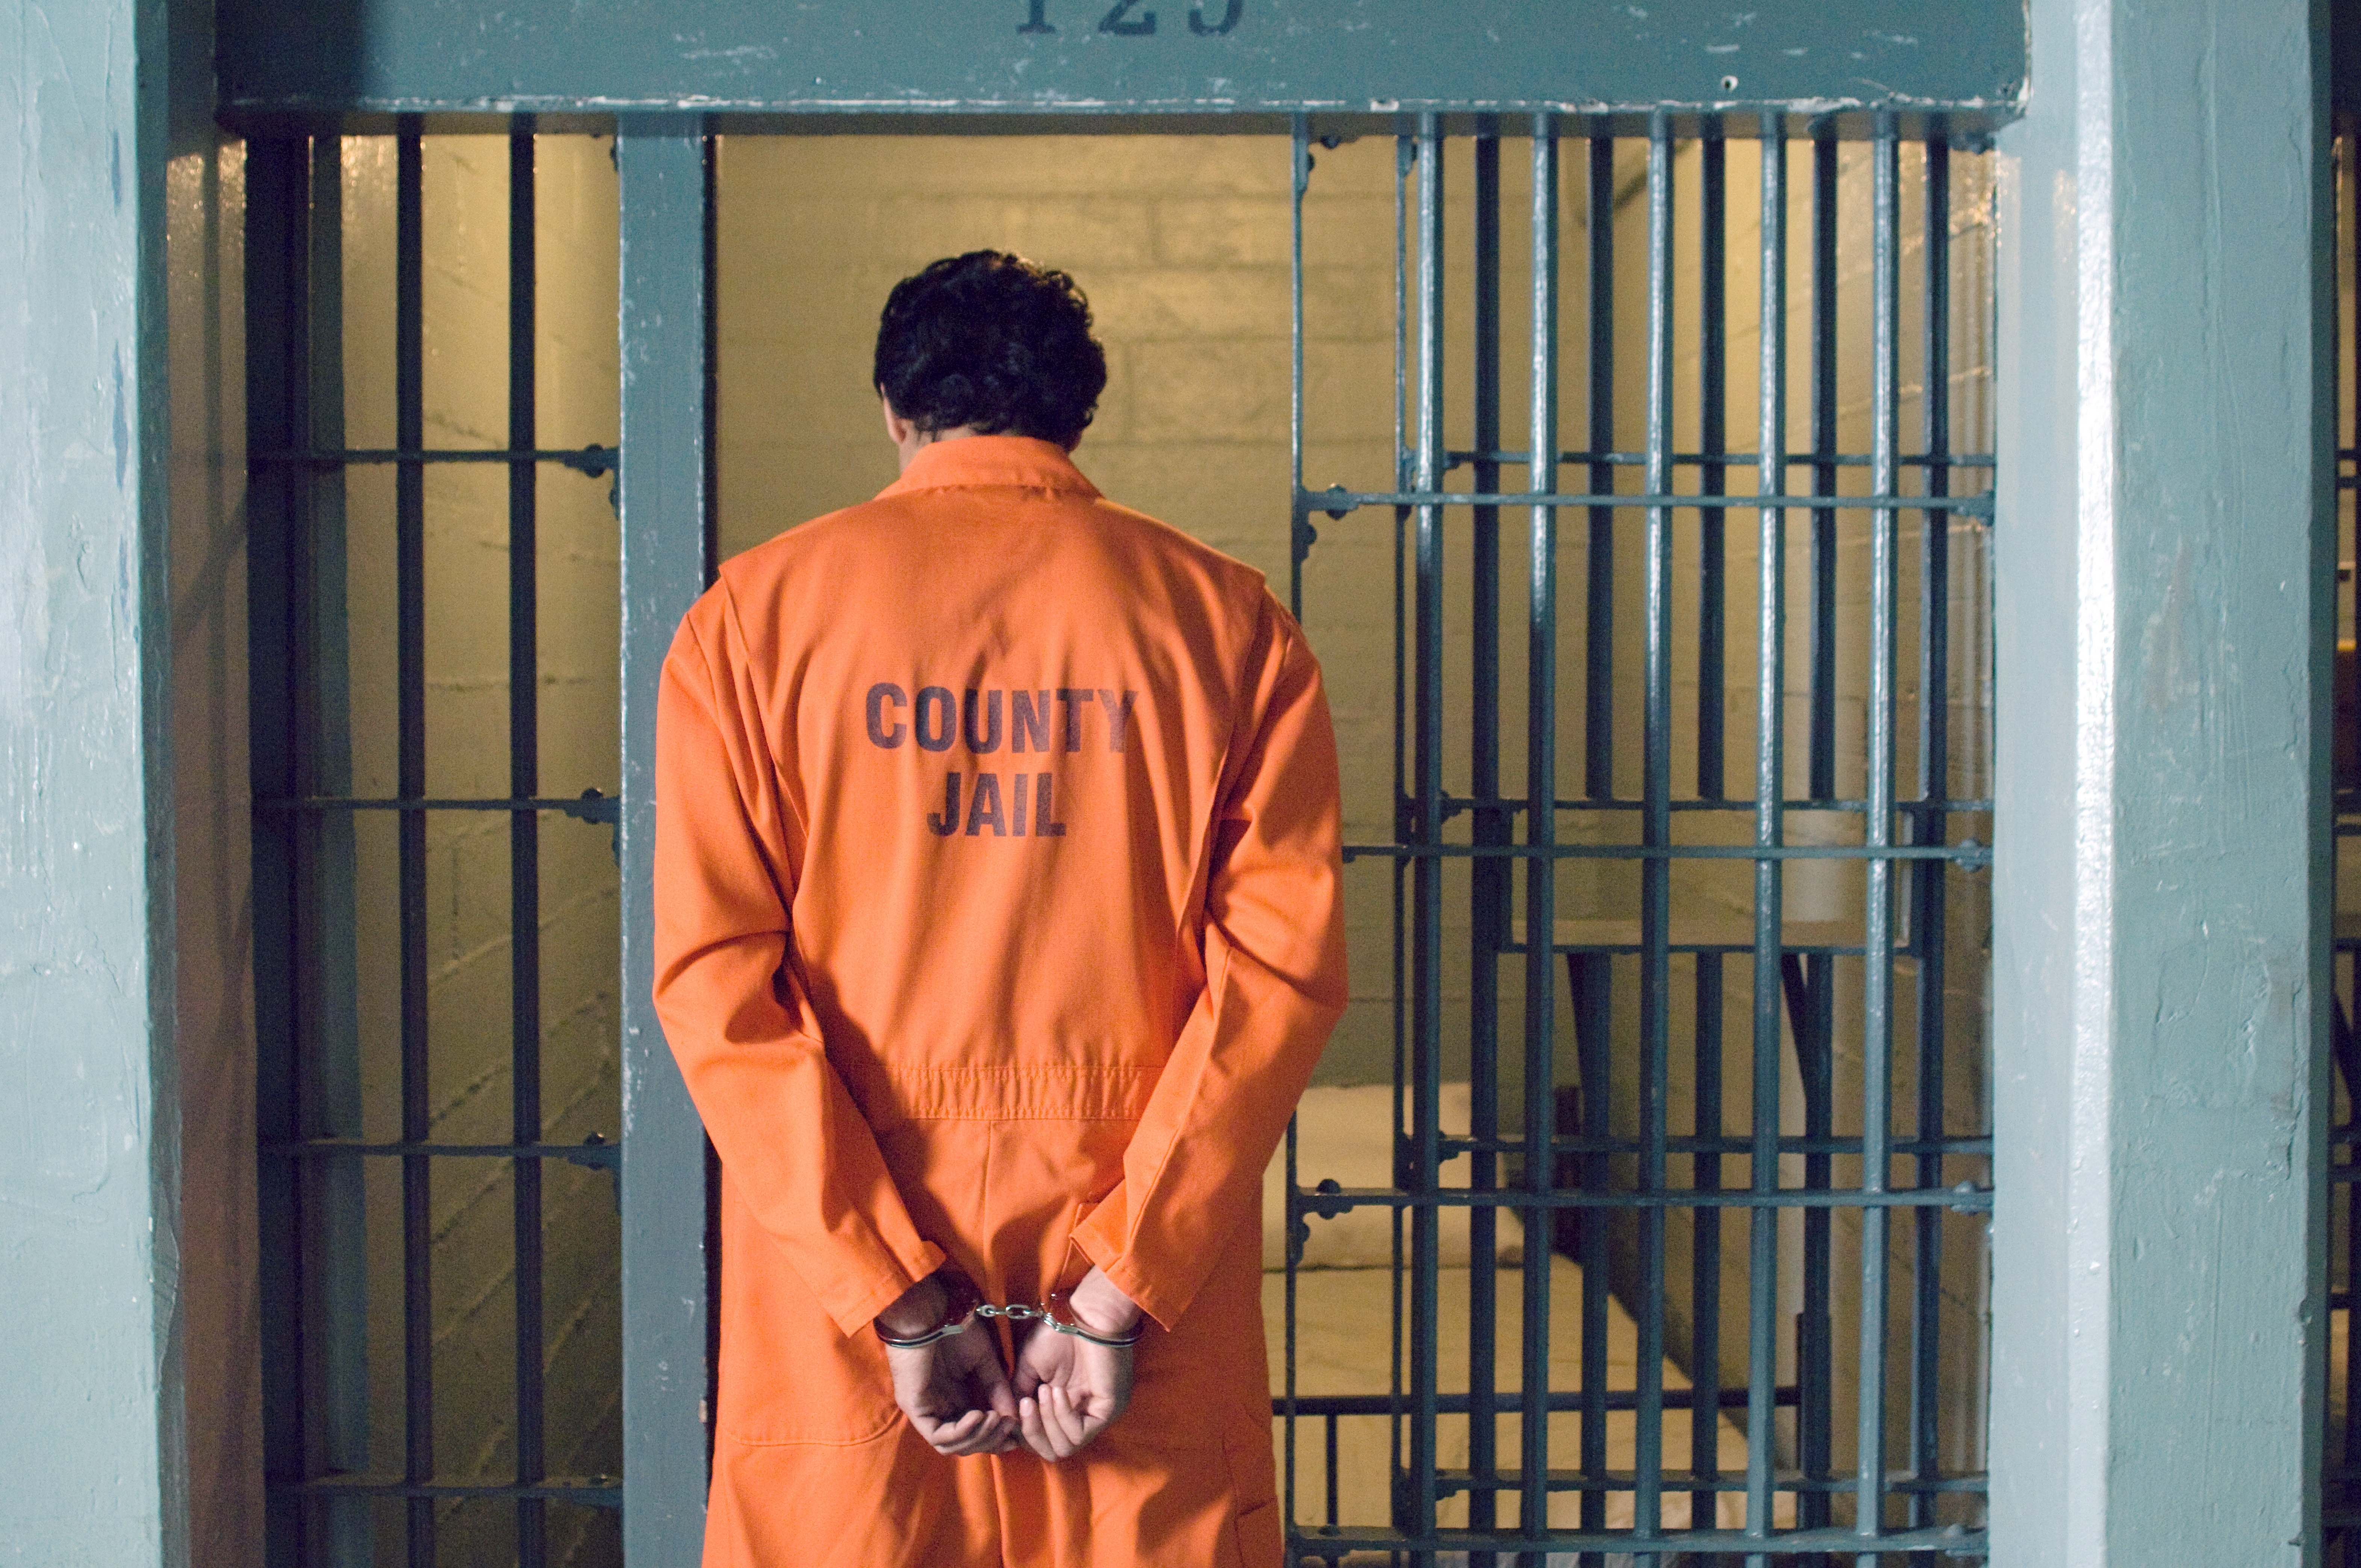 Handcuffed prisoner in jail (sirtravelalot/Shutterstock)